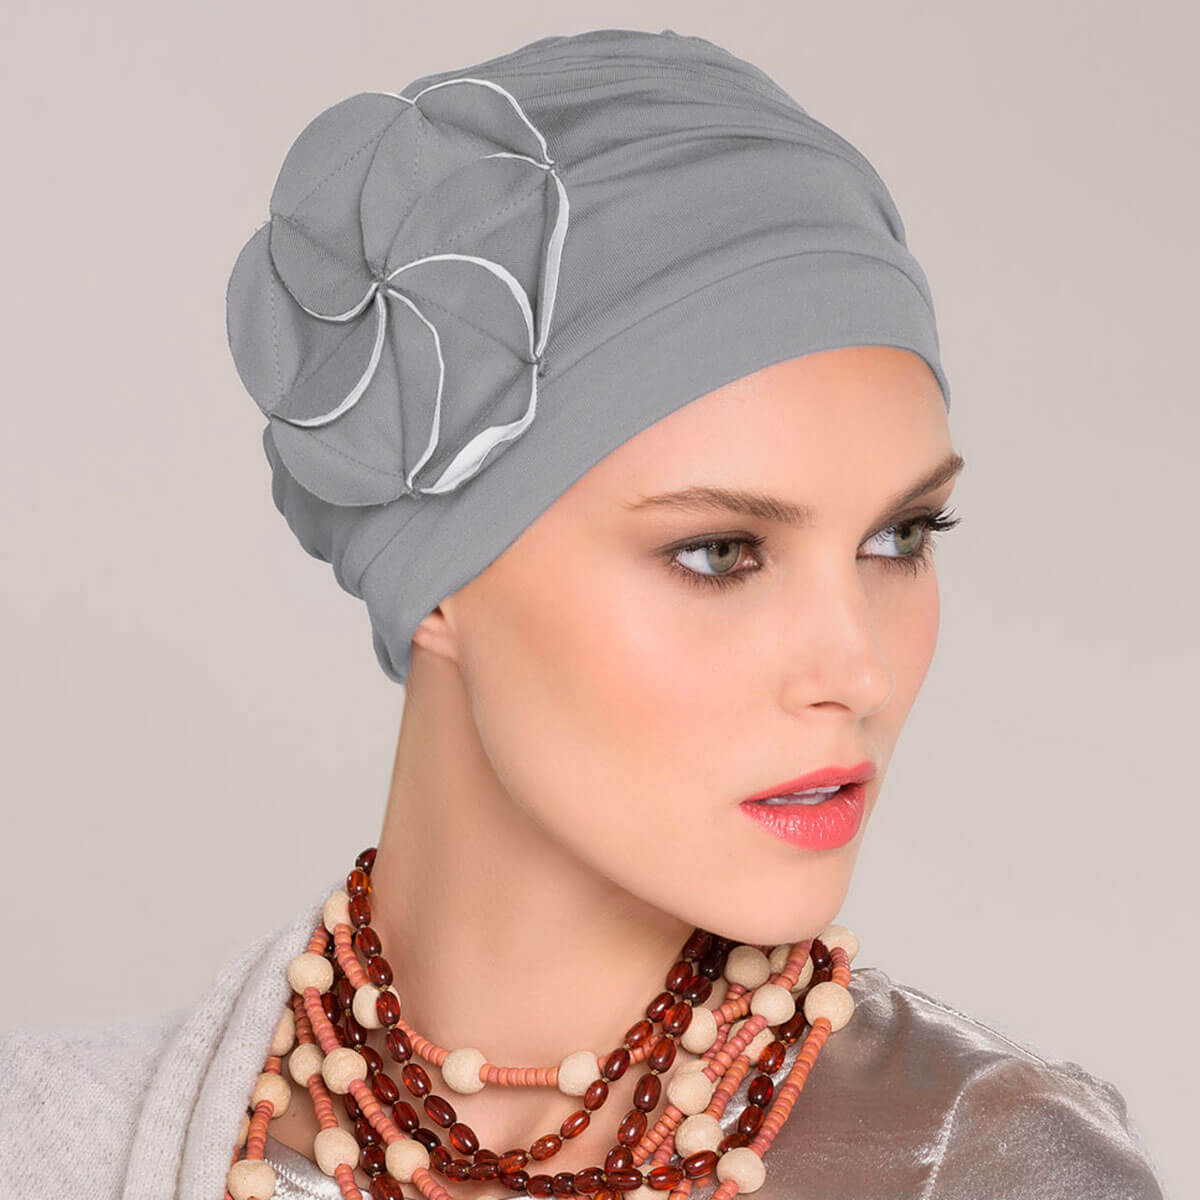 Señuelo saltar Evaluación Mora turbante oncológico Elle Wille | Beauty Studio Center